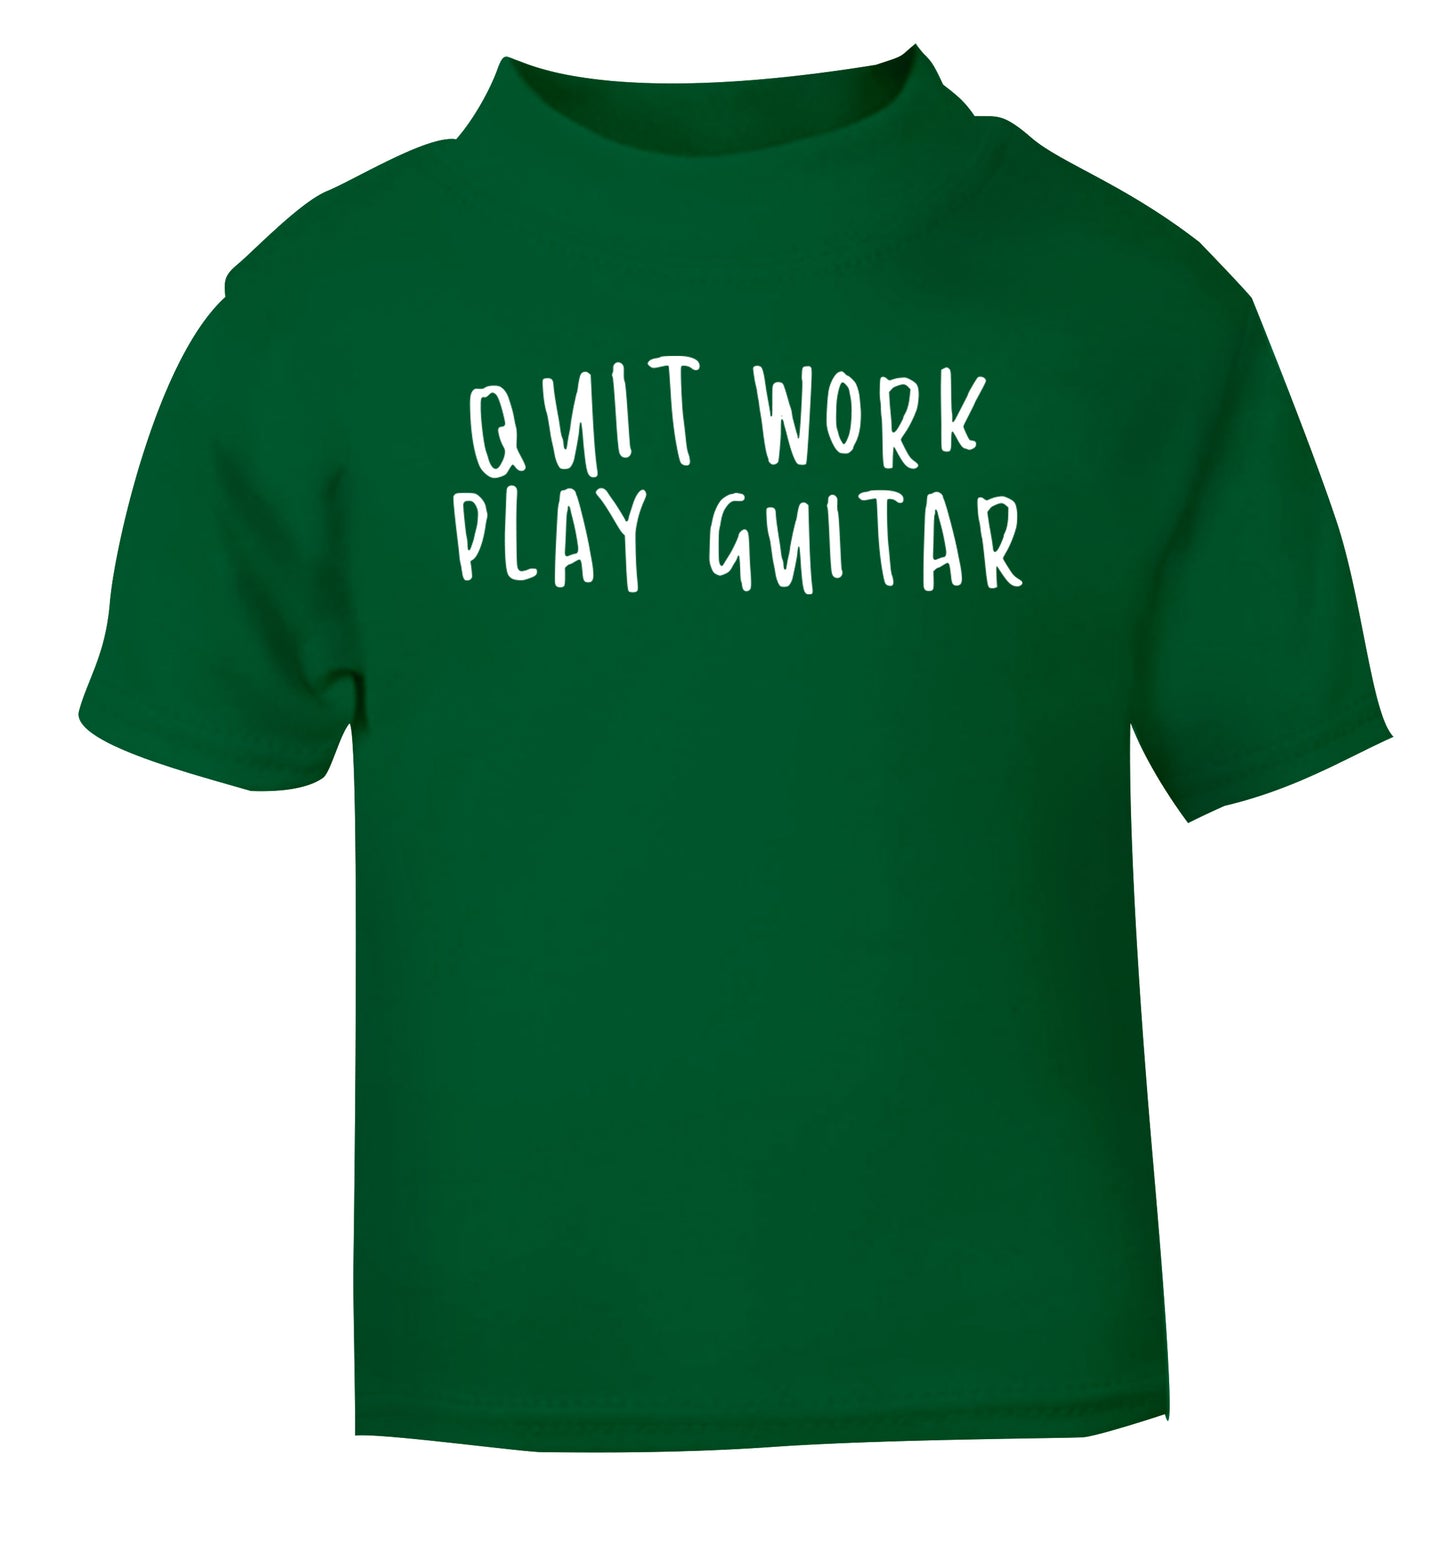 Quit work play guitar green Baby Toddler Tshirt 2 Years